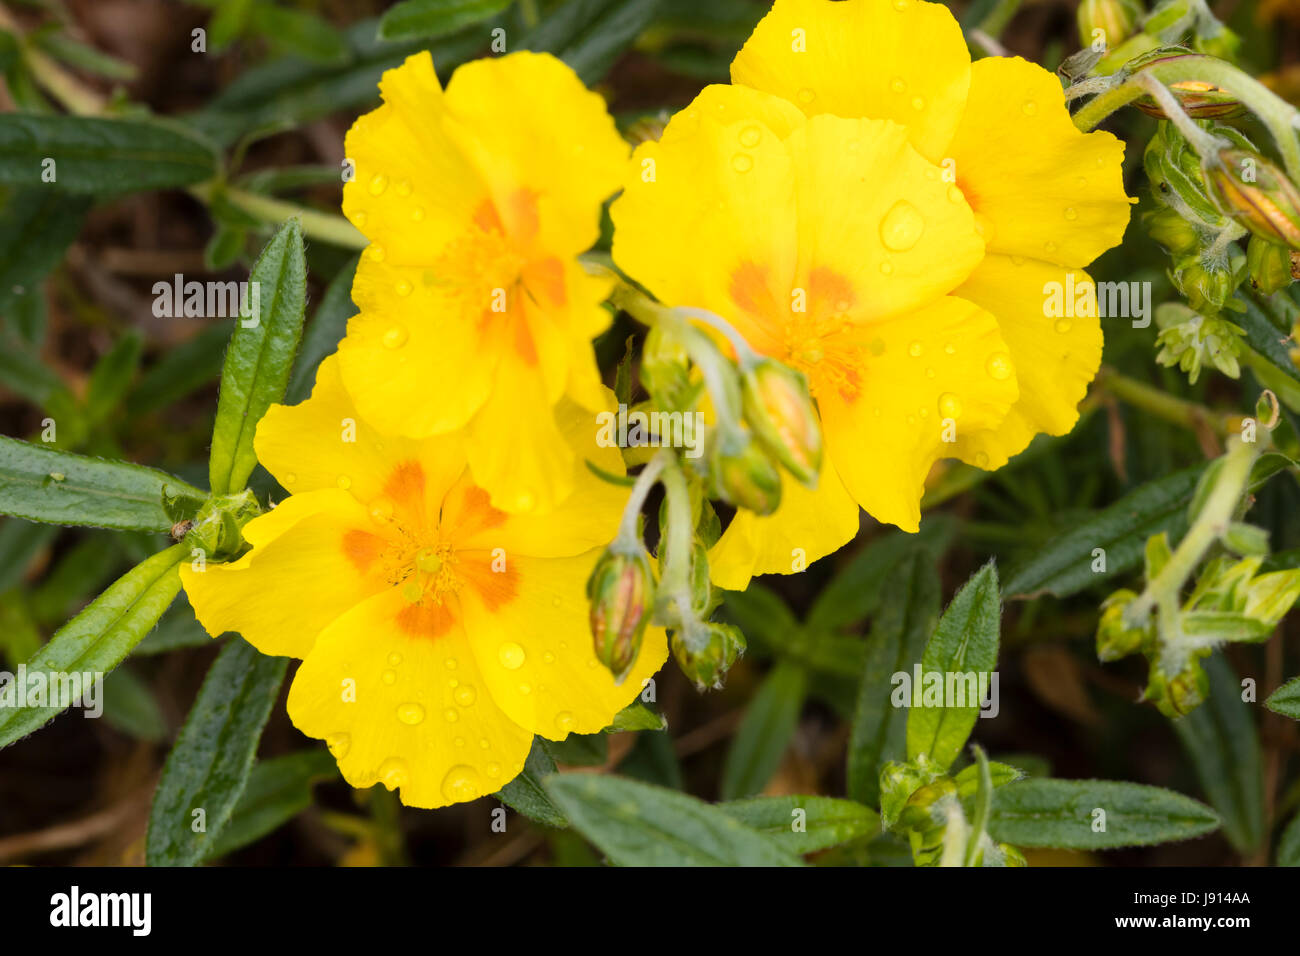 Bright yellow flowers ofthe ornamental creeping rock rose, Helianthemum 'Ben Fhada' Stock Photo